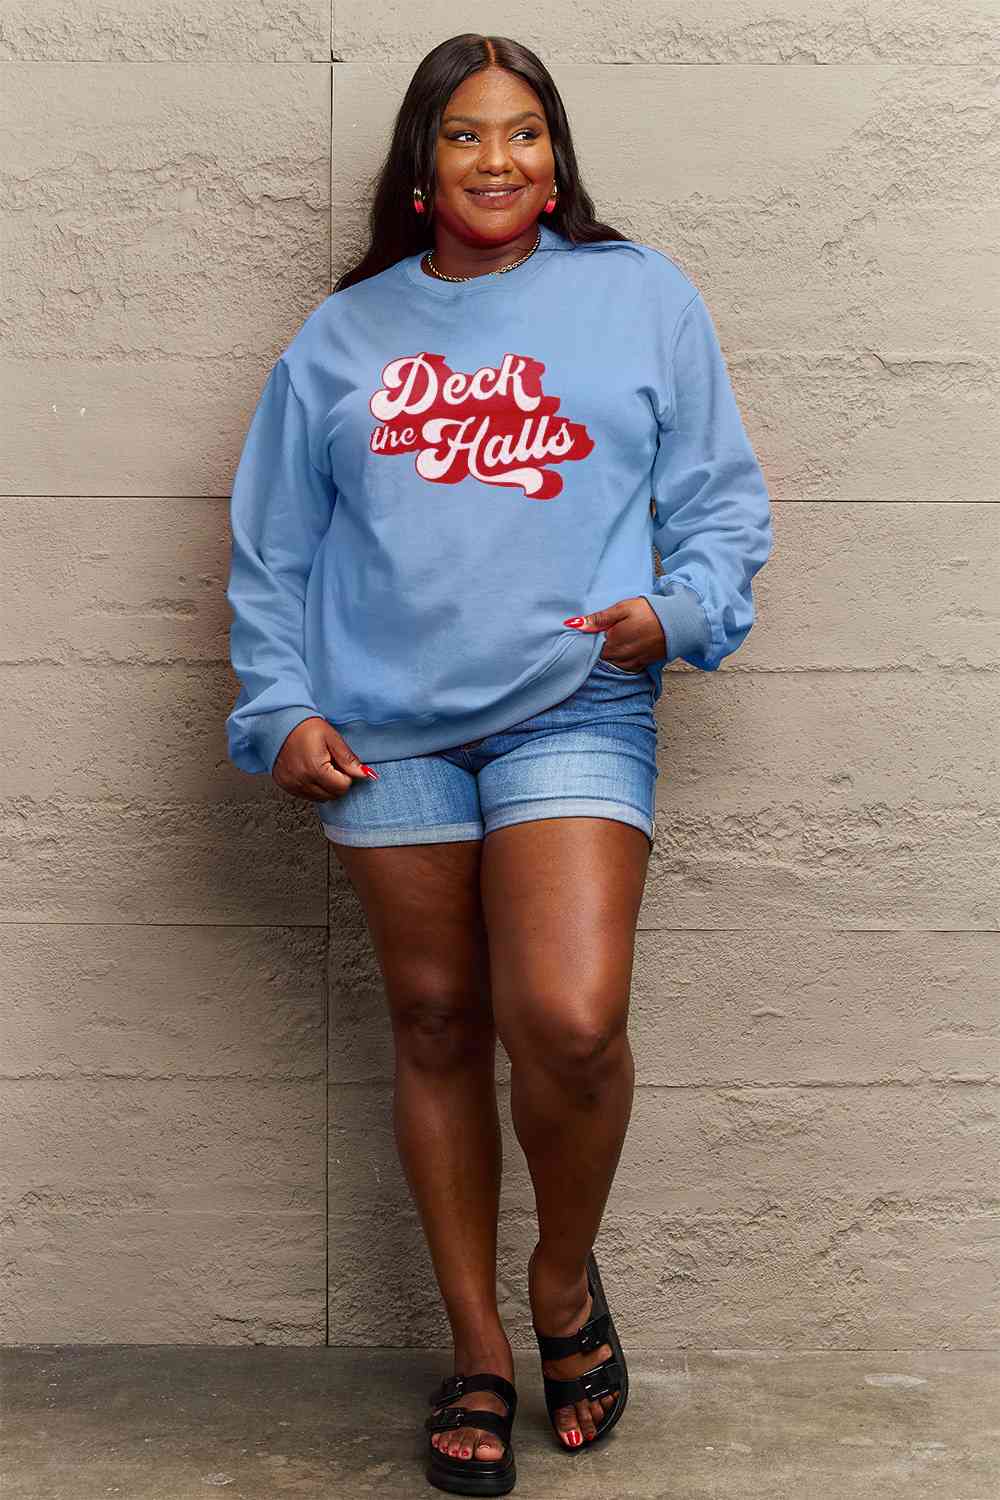 Simply Love Full Size DECK THE HALLS Graphic Sweatshirt